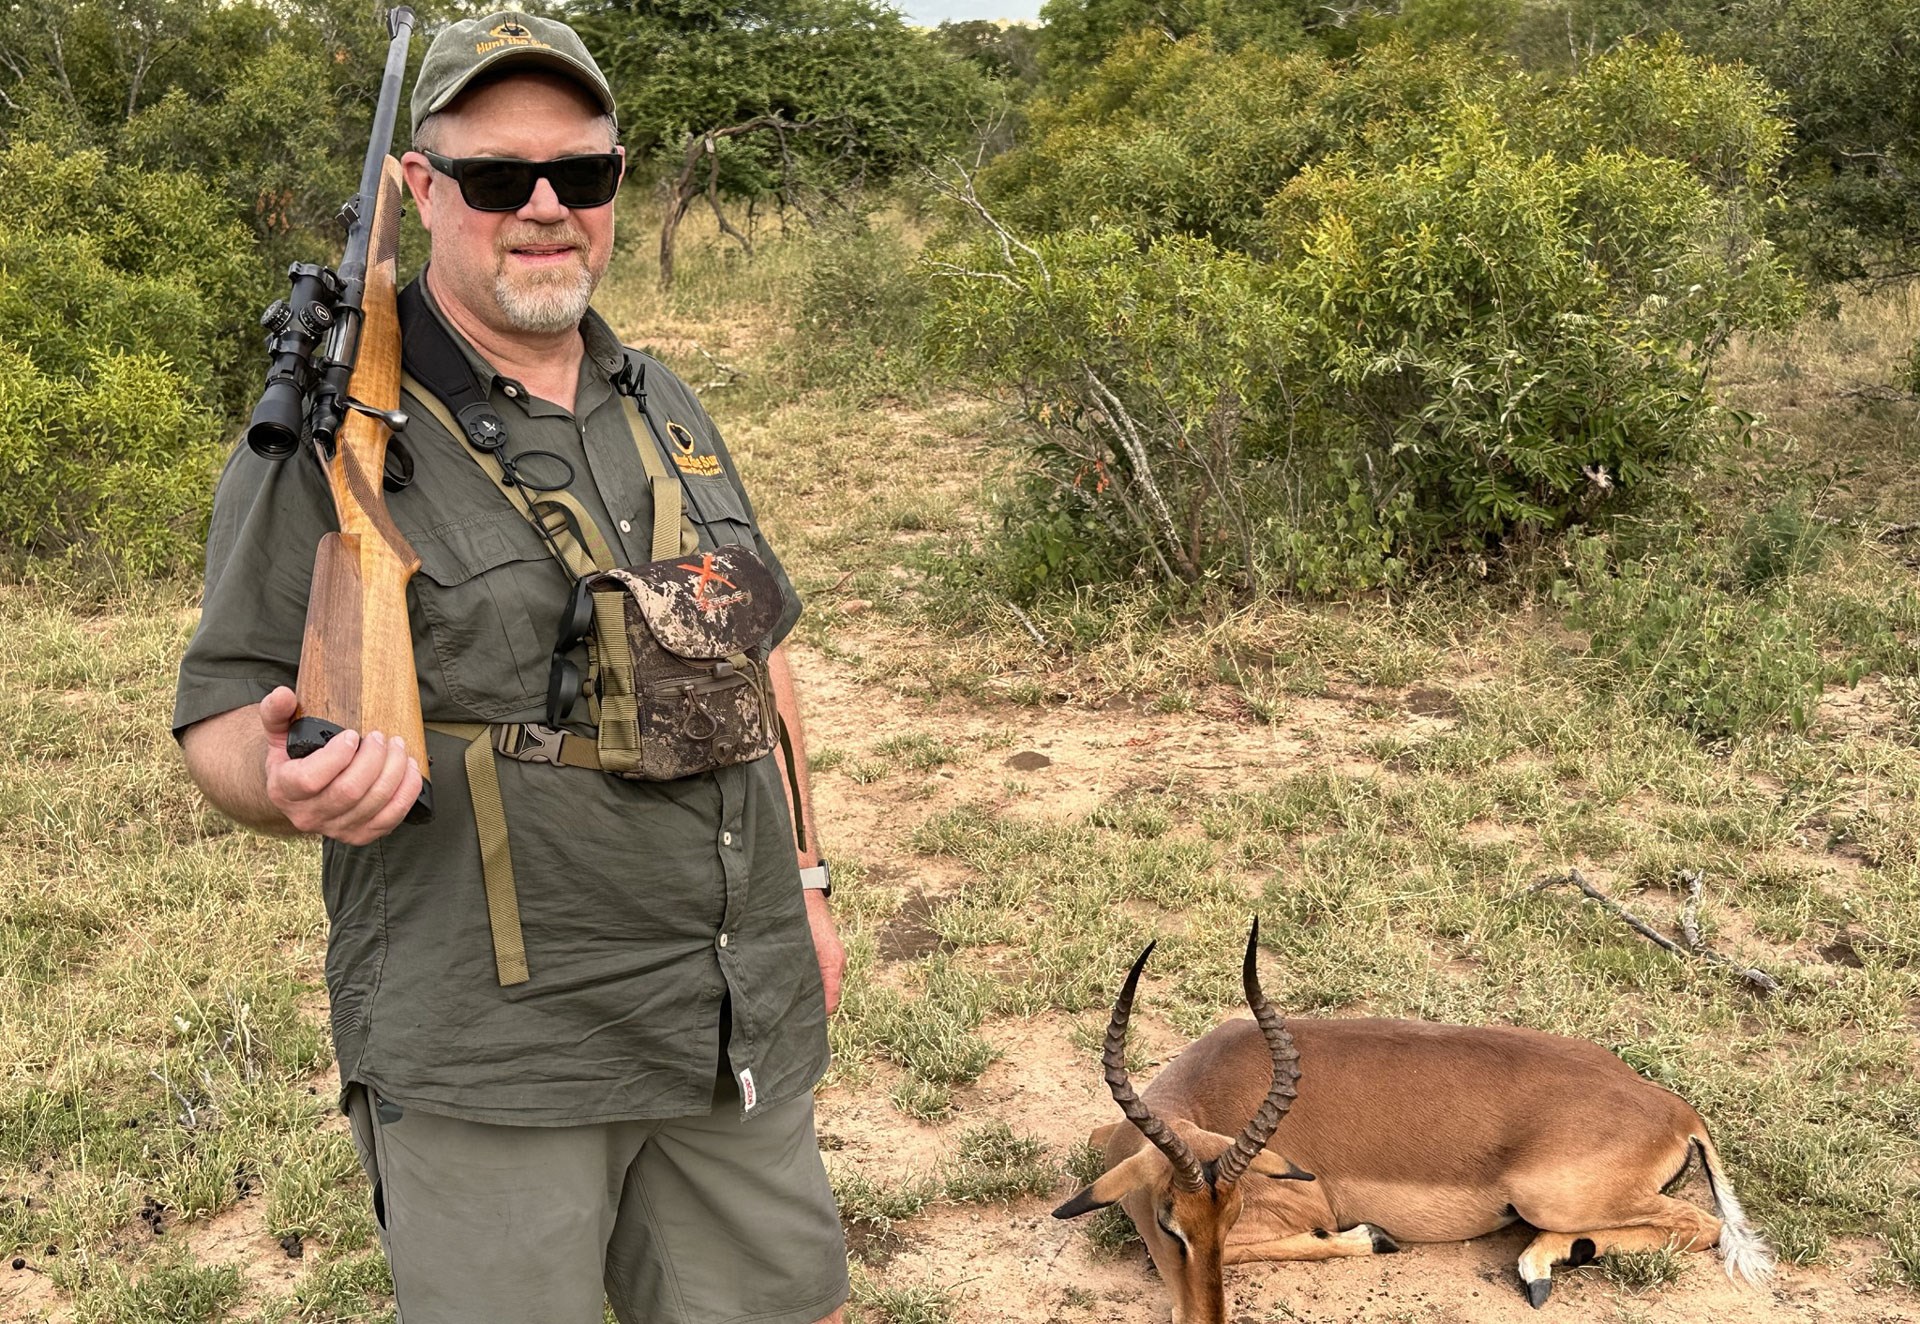 Hunter with rifle and animal